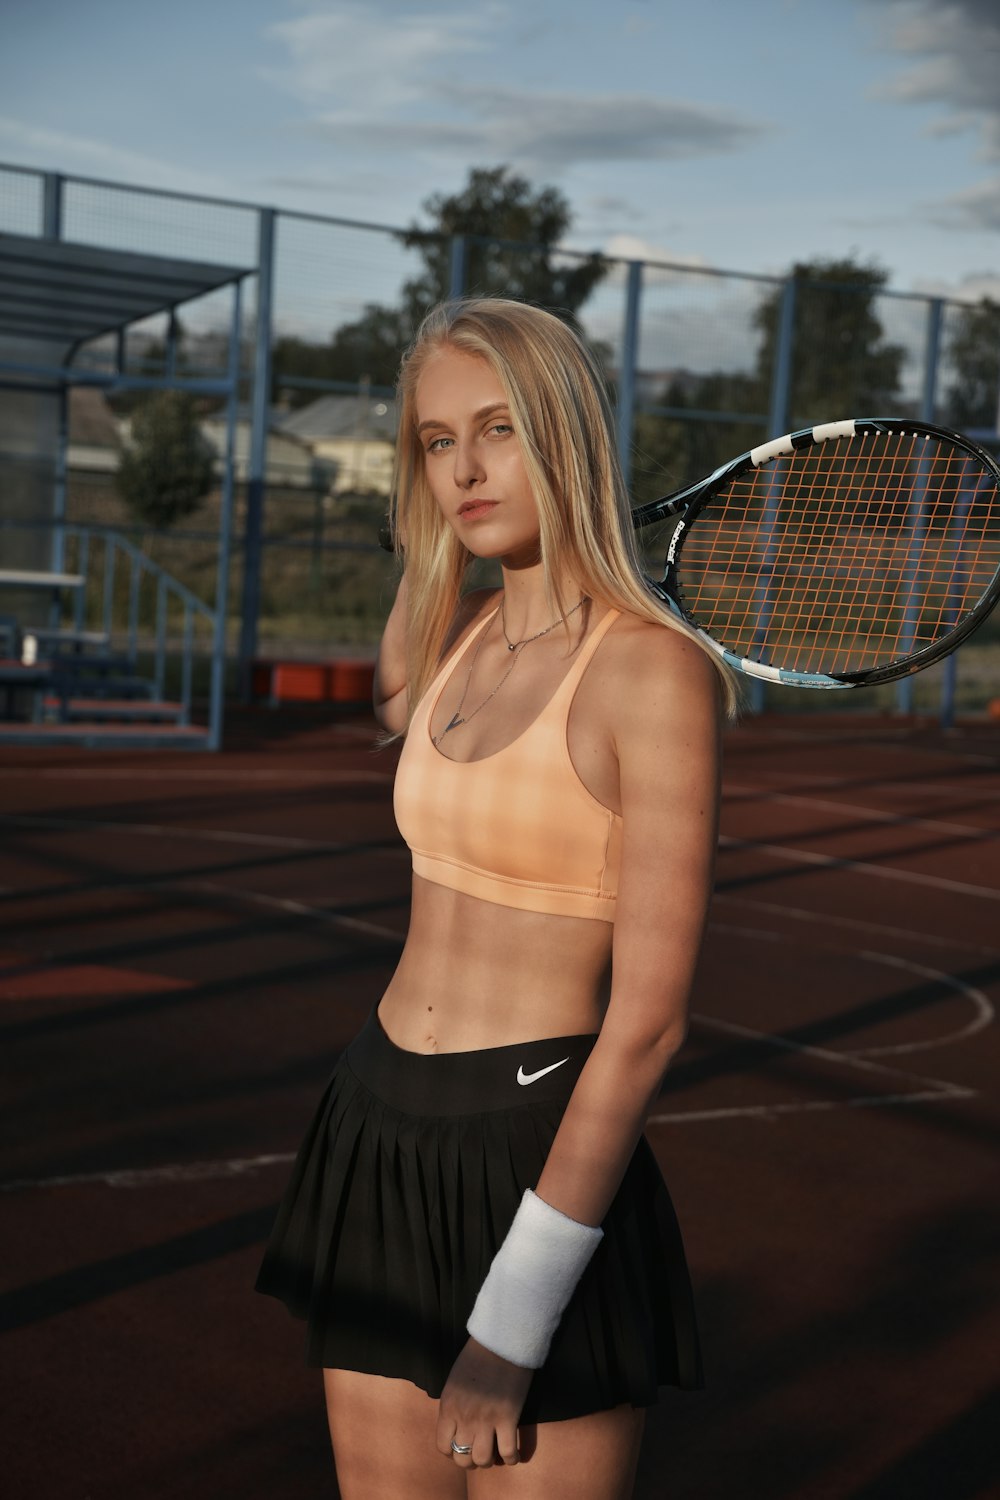 a woman holding a tennis racquet on top of a tennis court